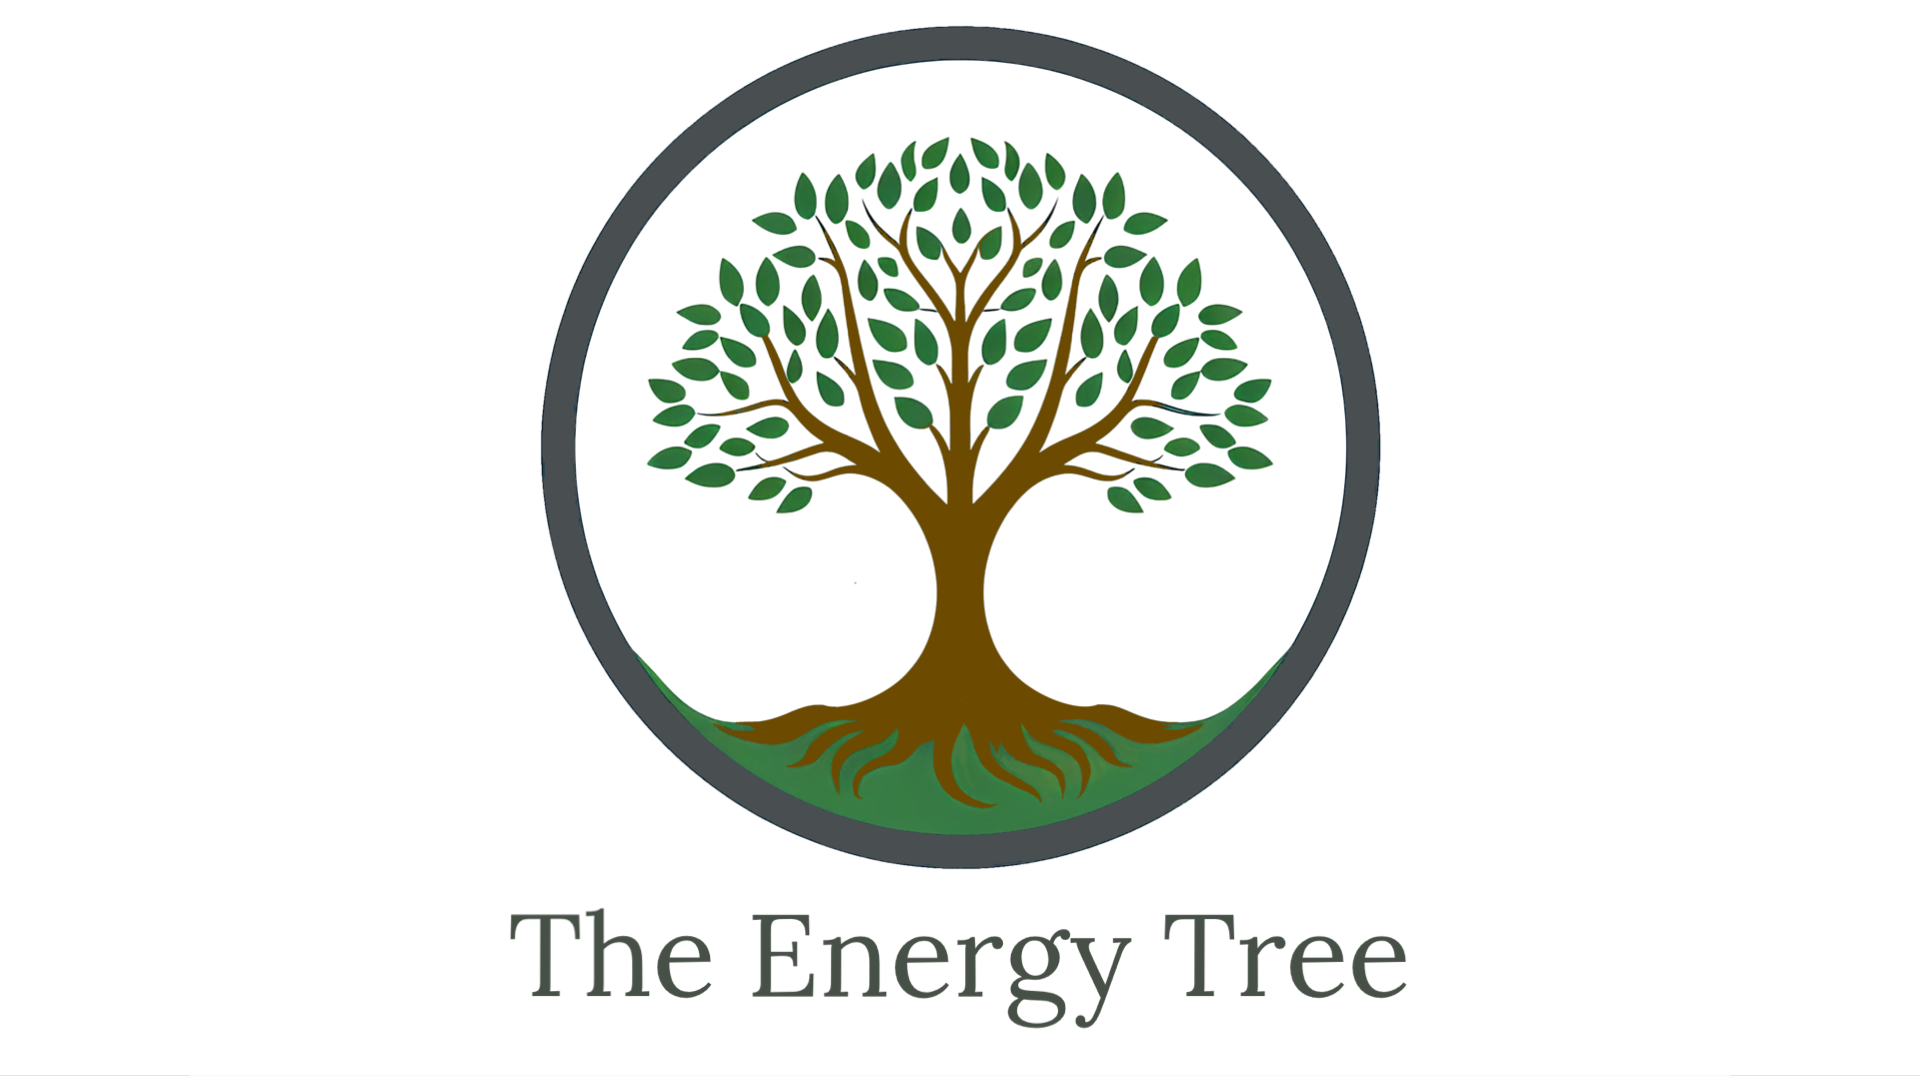 A minimalist tree logo illustration in an enso